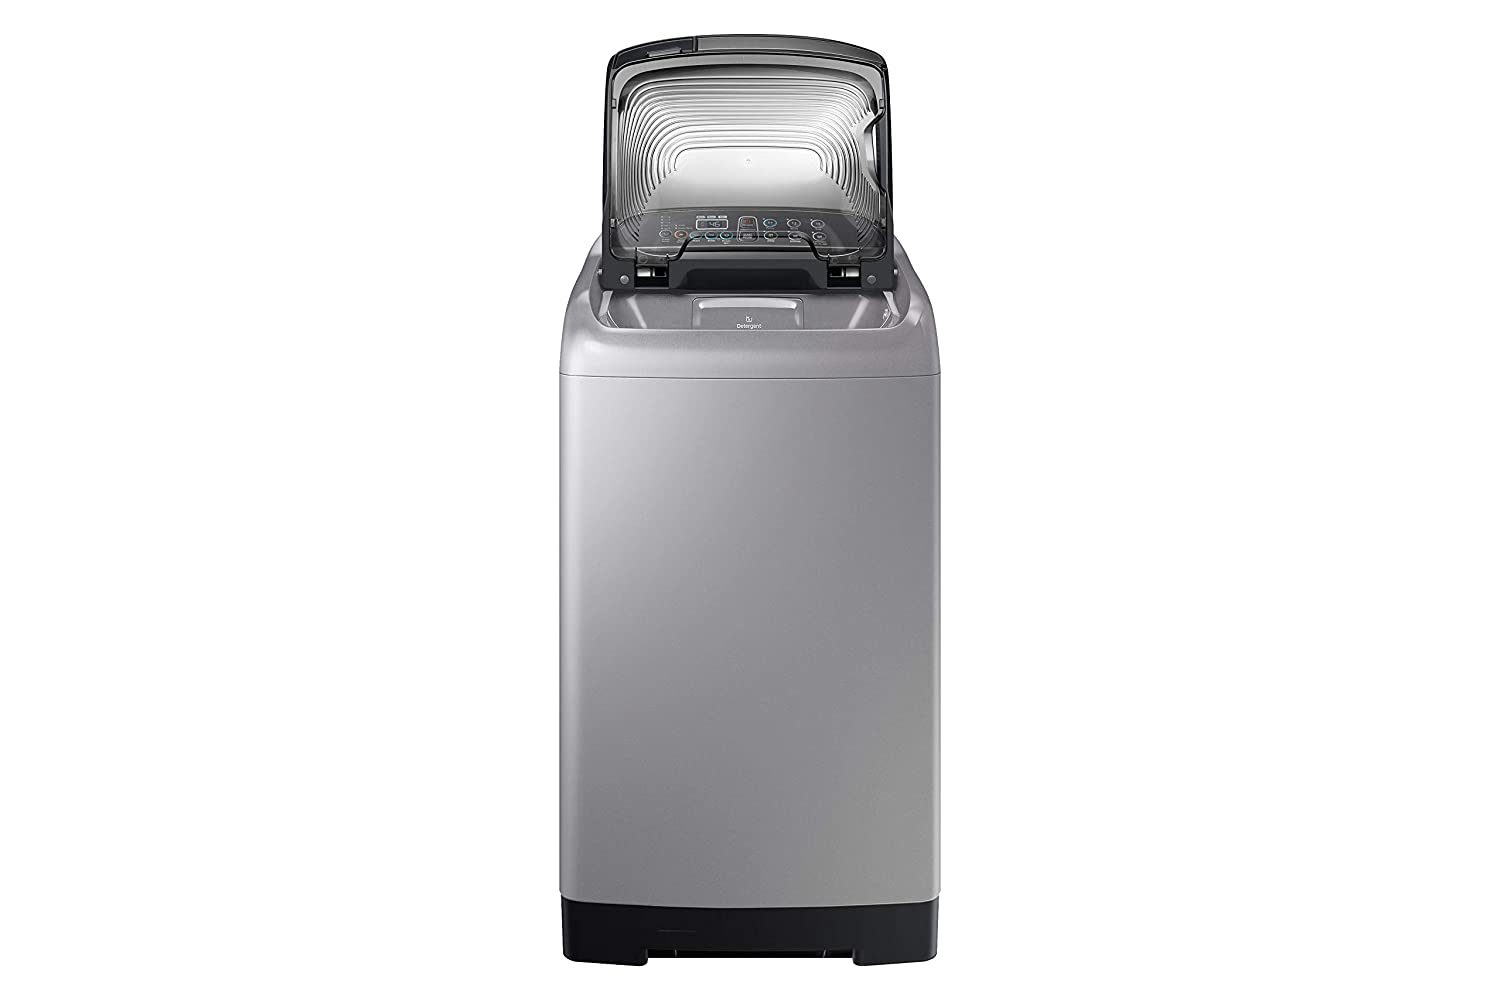 Samsung 7 Kg Fully-Automatic Top Loading Washing Machine (WA70N4422VS/TL, Silver) - Mahajan Electronics Online